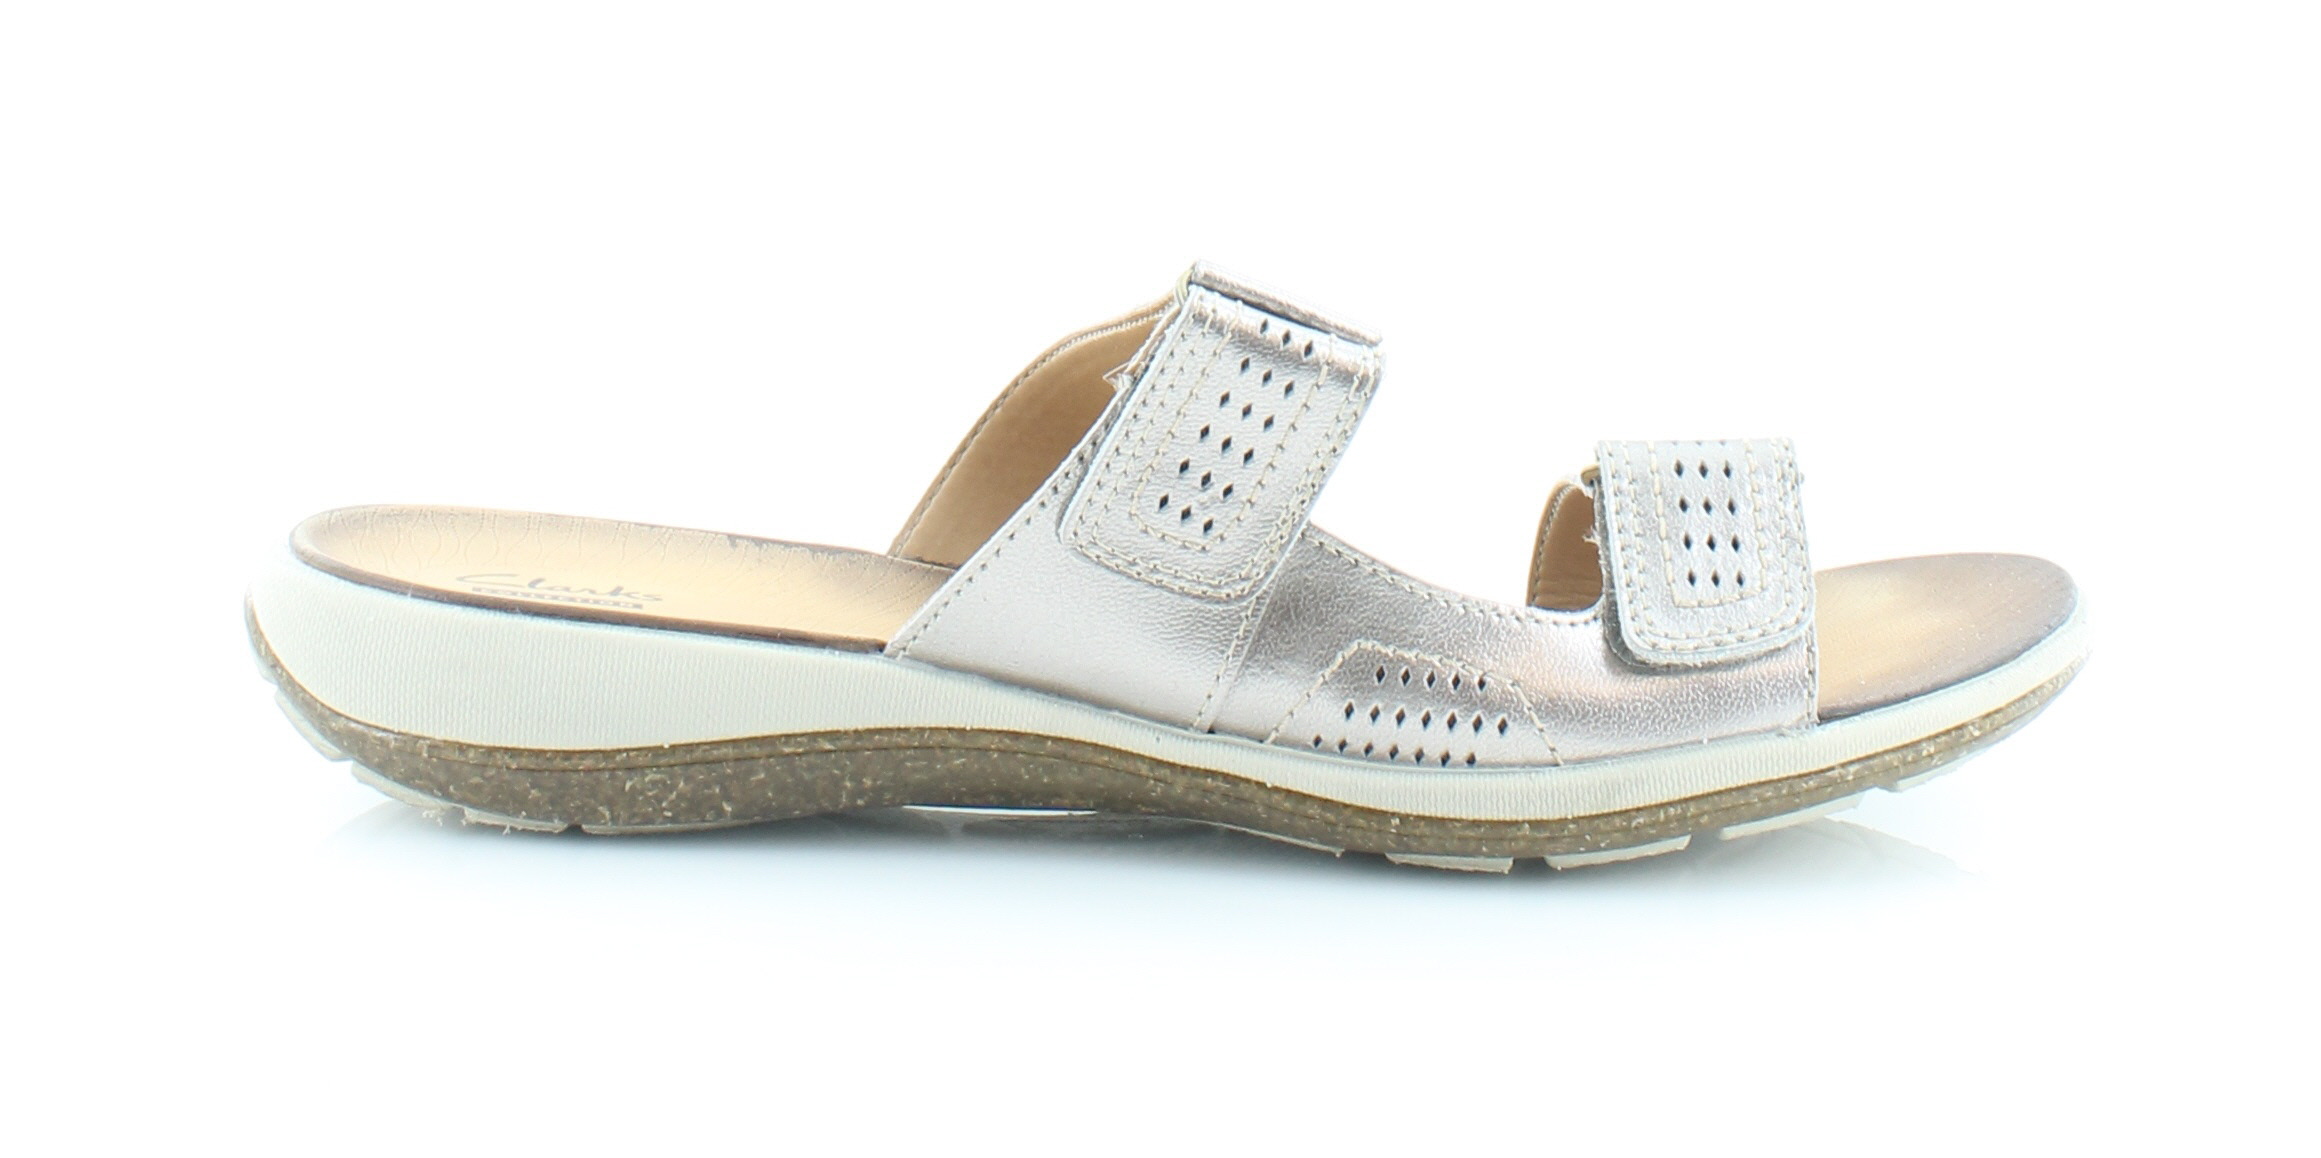 Clarks Taline Pop Silver Womens Shoes Size 12 M Sandals MSRP $65 | eBay